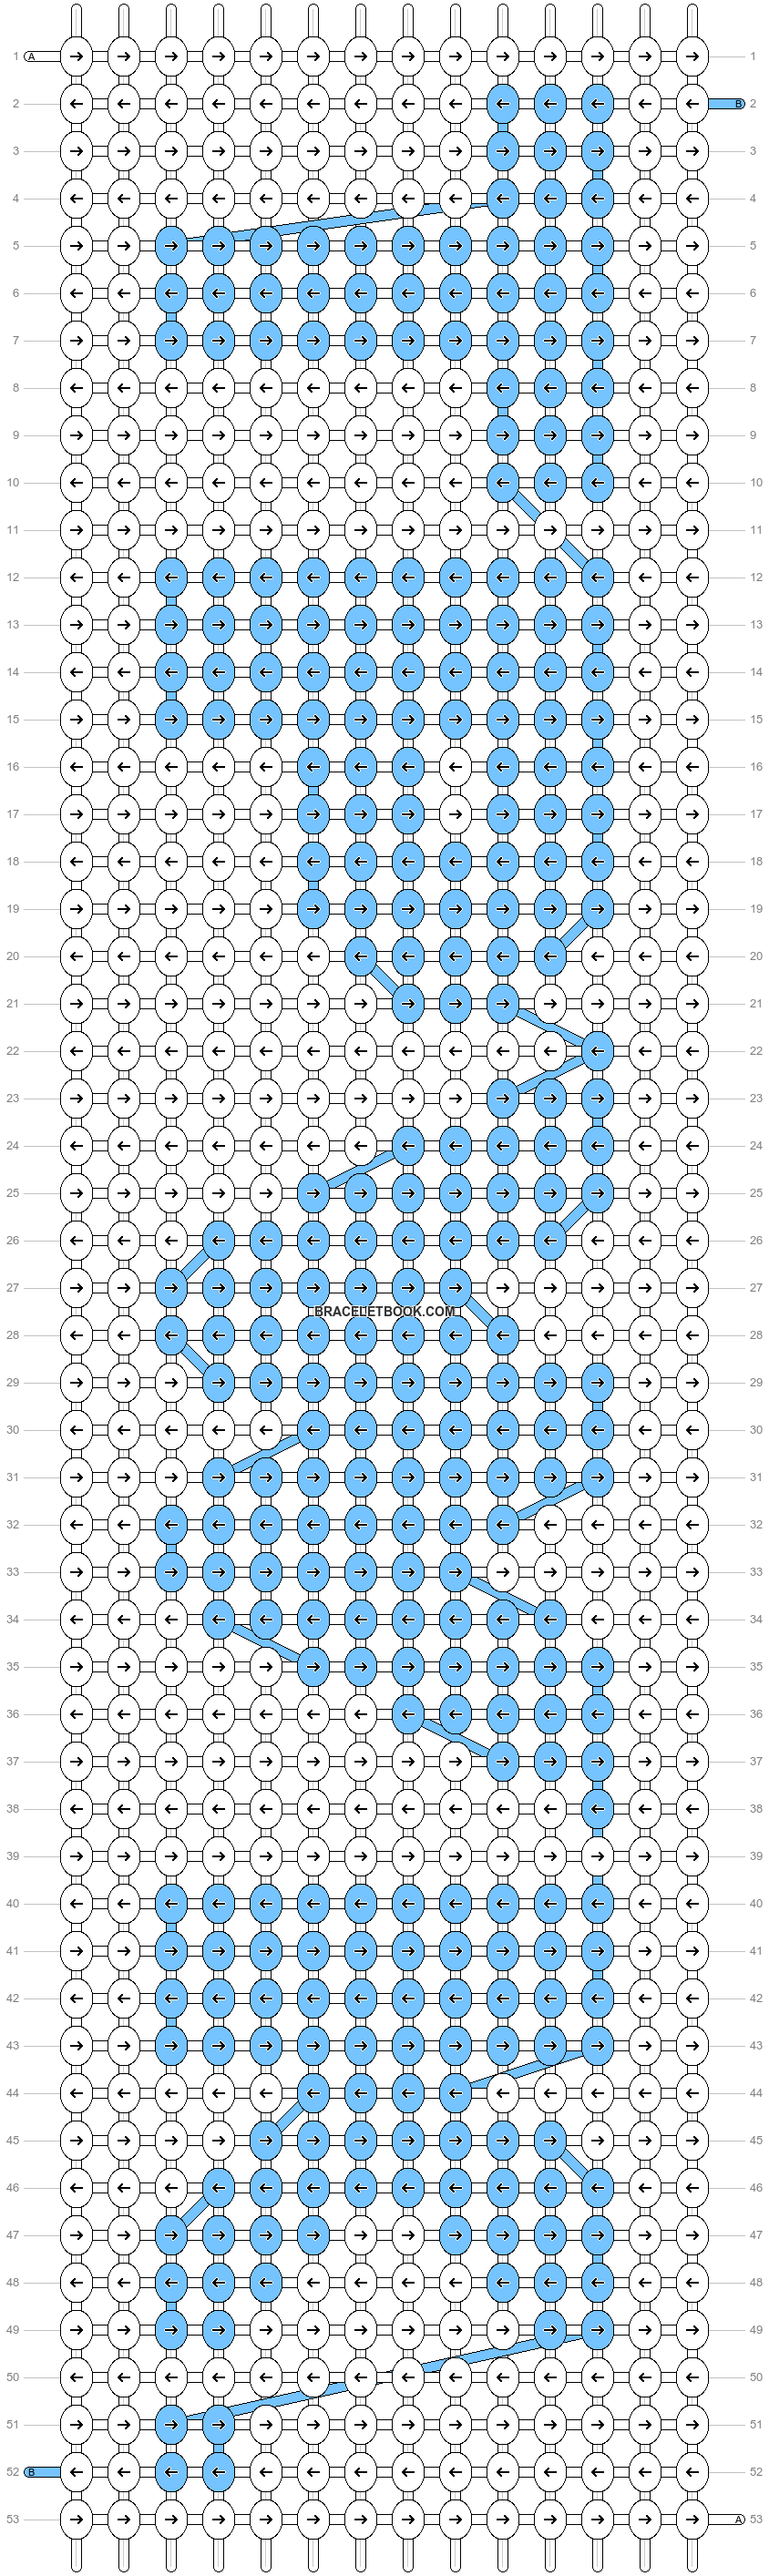 Alpha pattern #38816 variation #130761 pattern